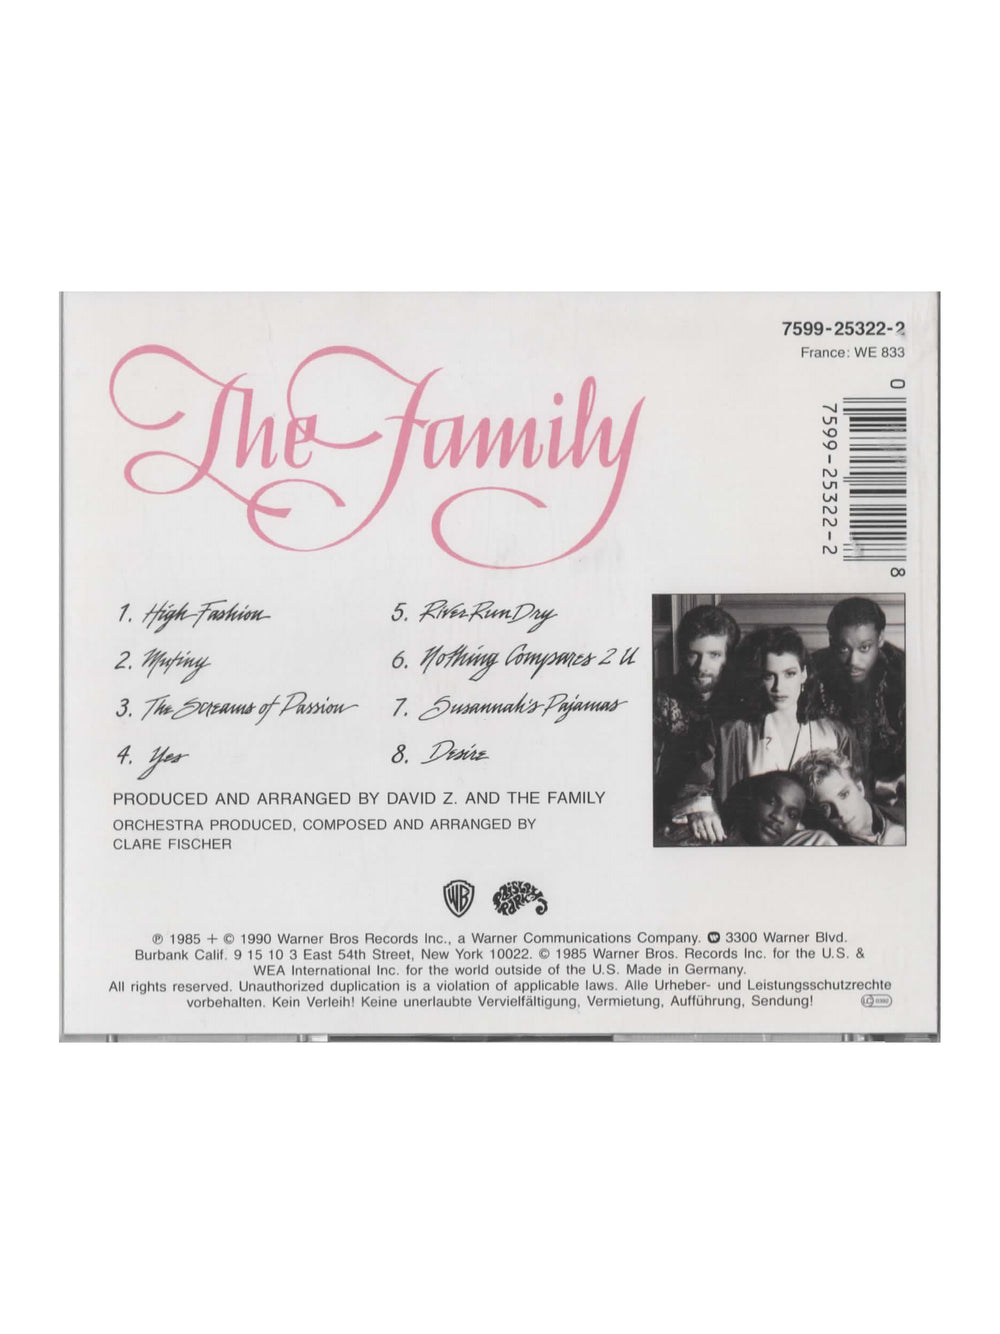 Prince – The Family Self Titled CD Album 8 Tracks Prince EU Release WE833